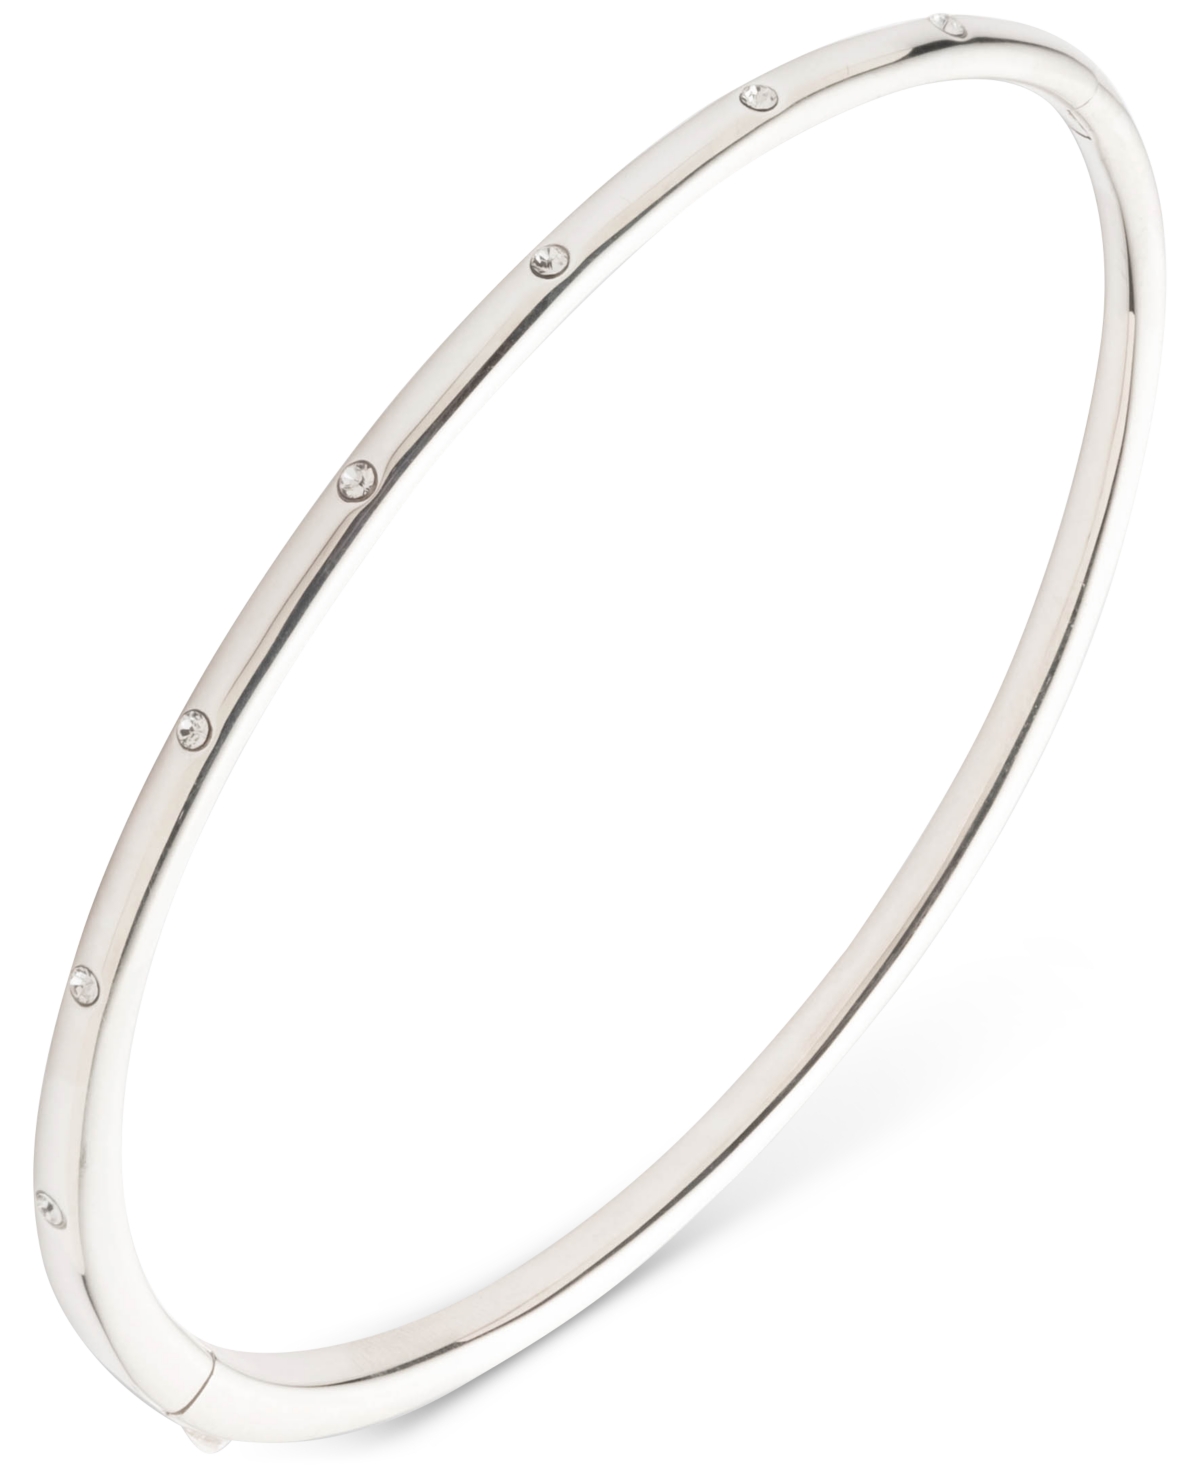 Lauren Ralph Lauren Crystal Studded Bangle Bracelet in Sterling Silver - Silver